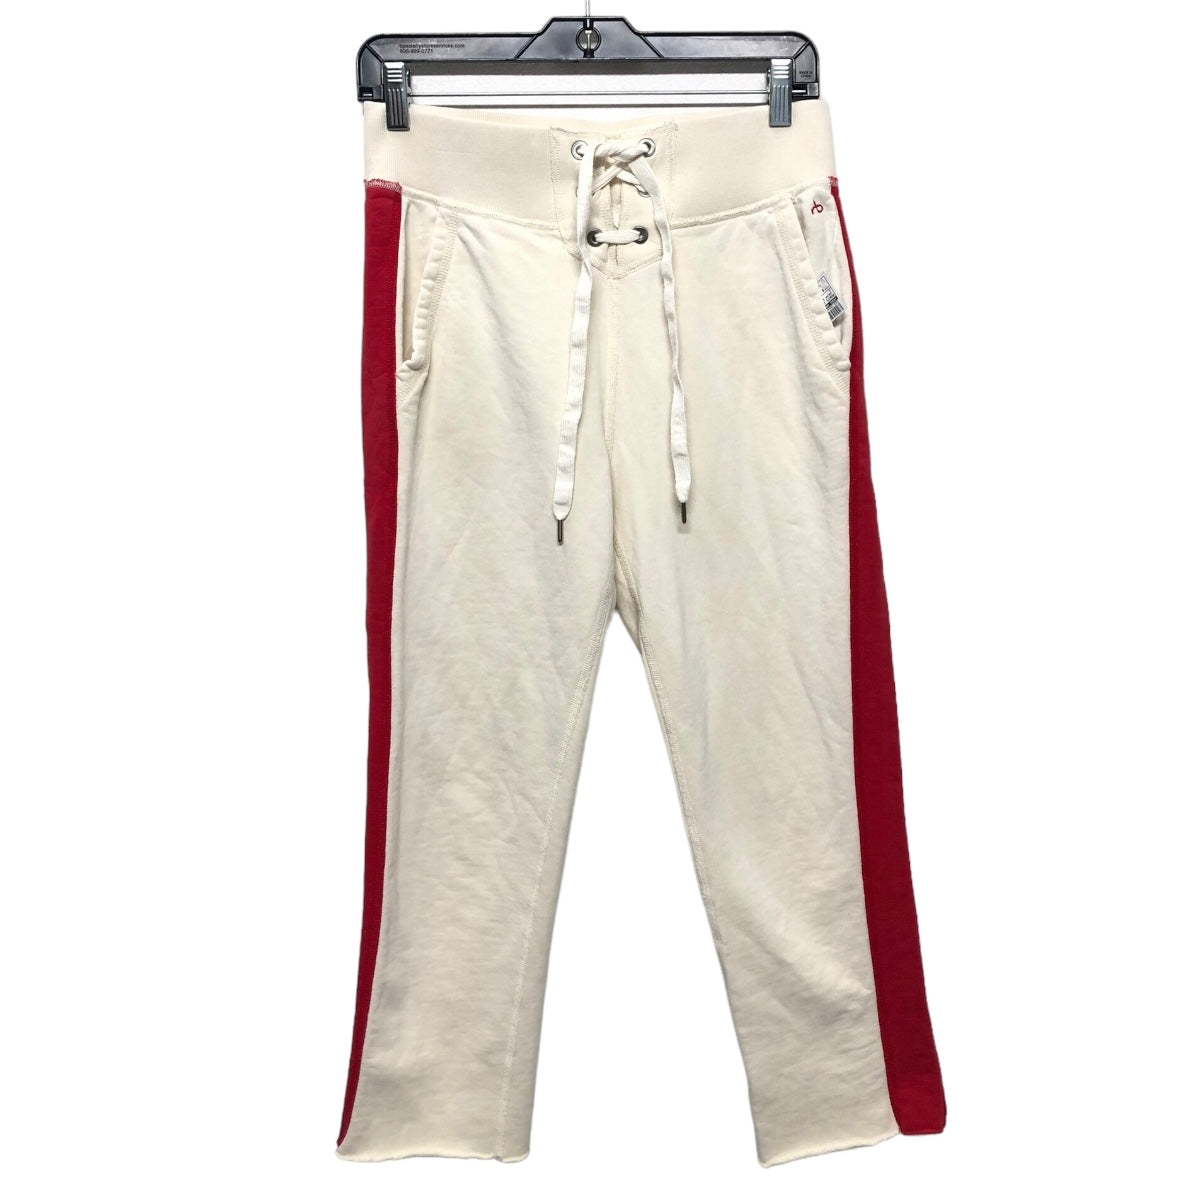 Cream & Red Pants Lounge Rag And Bone, Size S